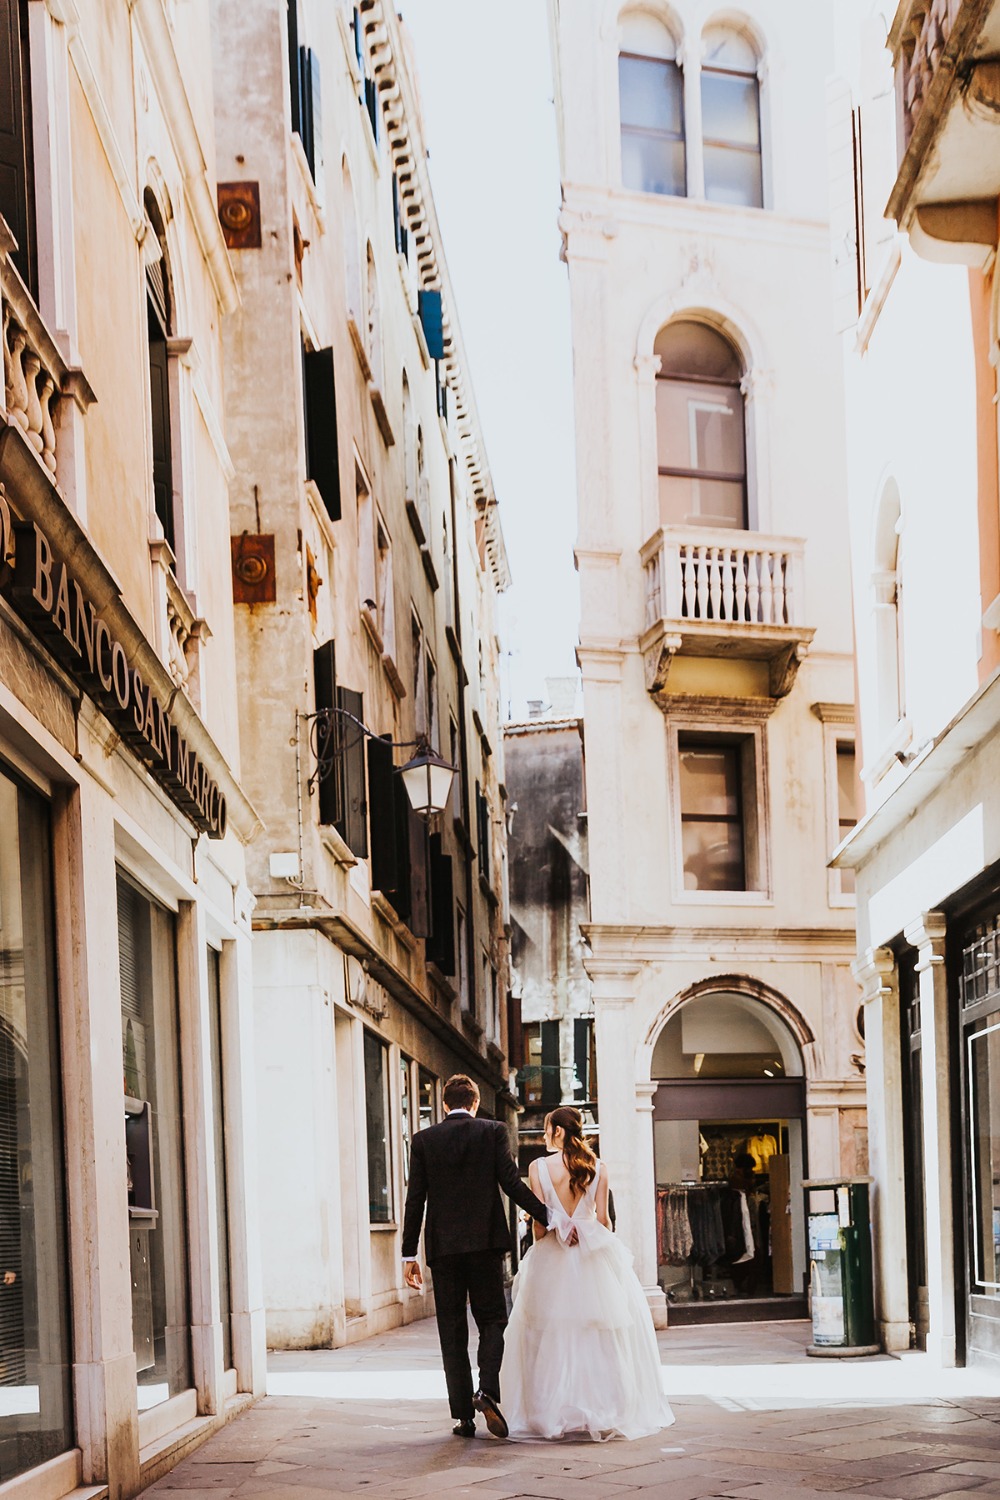 taking a wedding walk in Venice